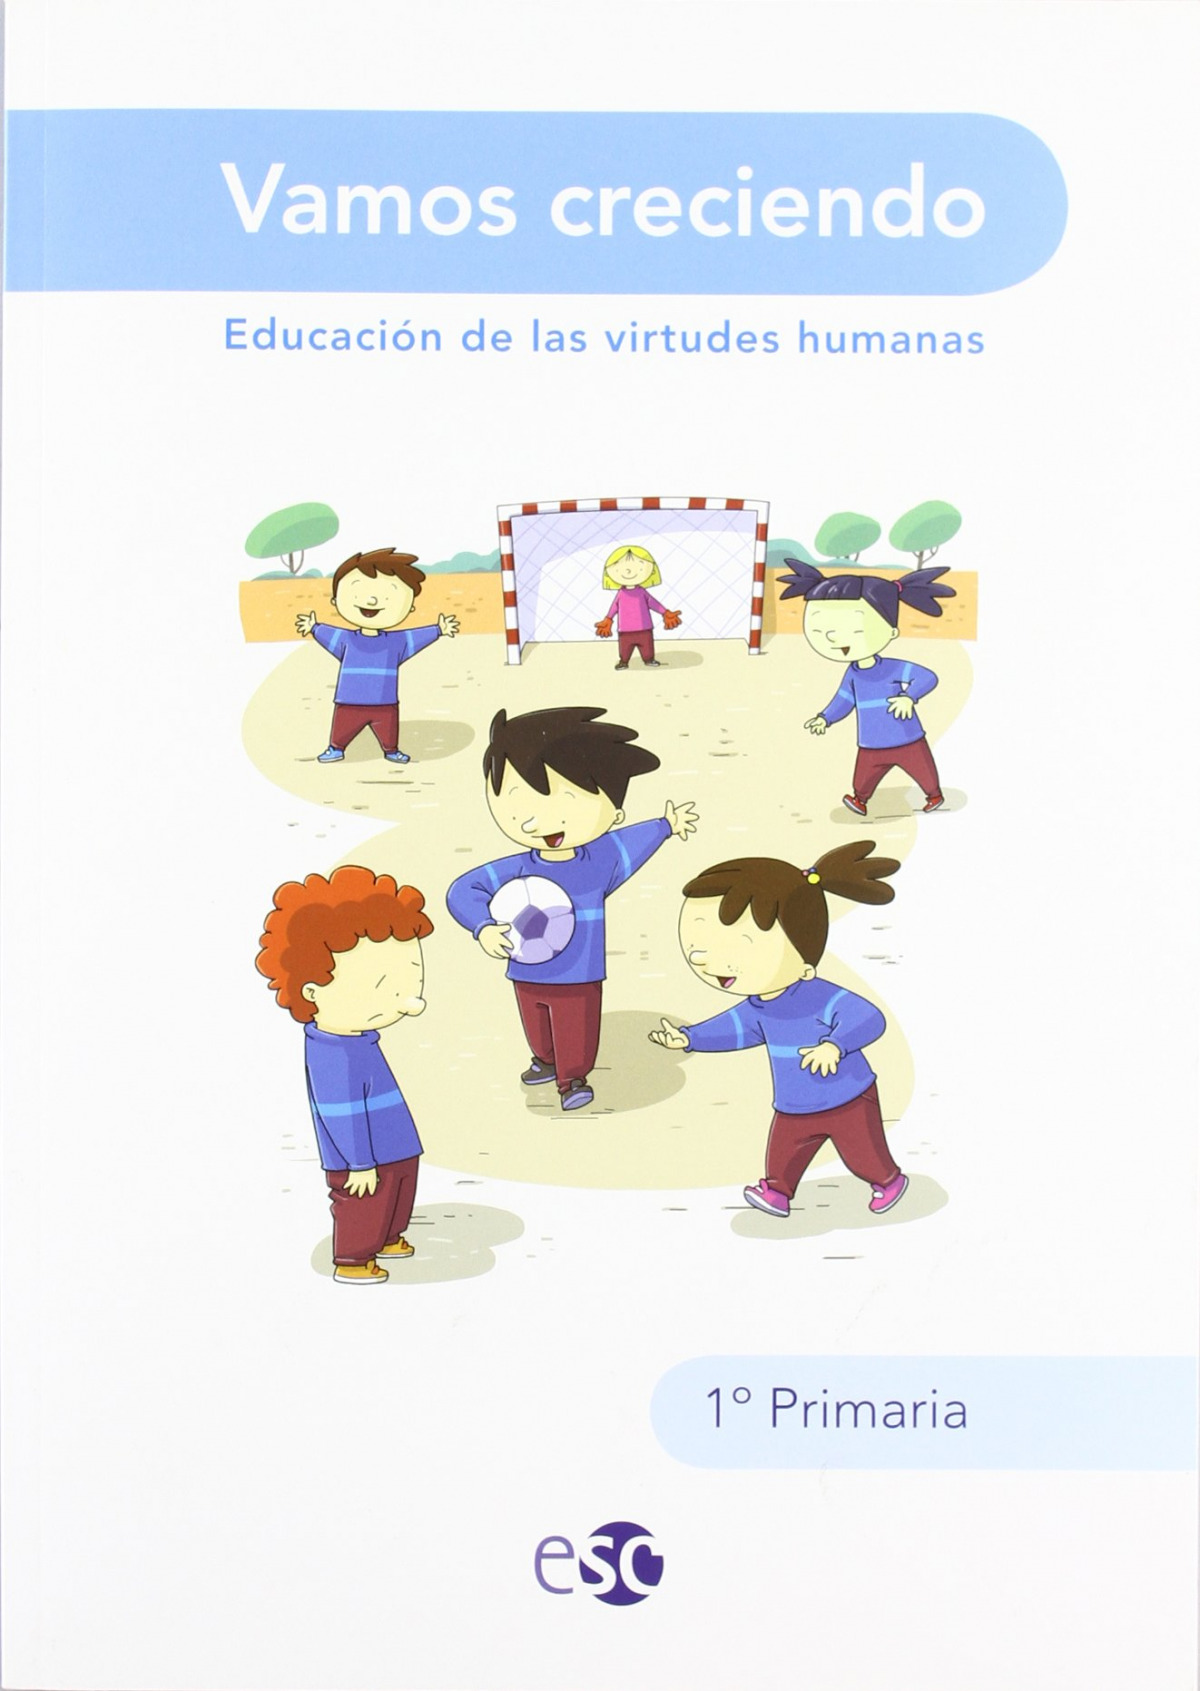 (09).vamos creciendo 1ºprimaria (ed.virtudes humanas) - Amat Ruiz, José